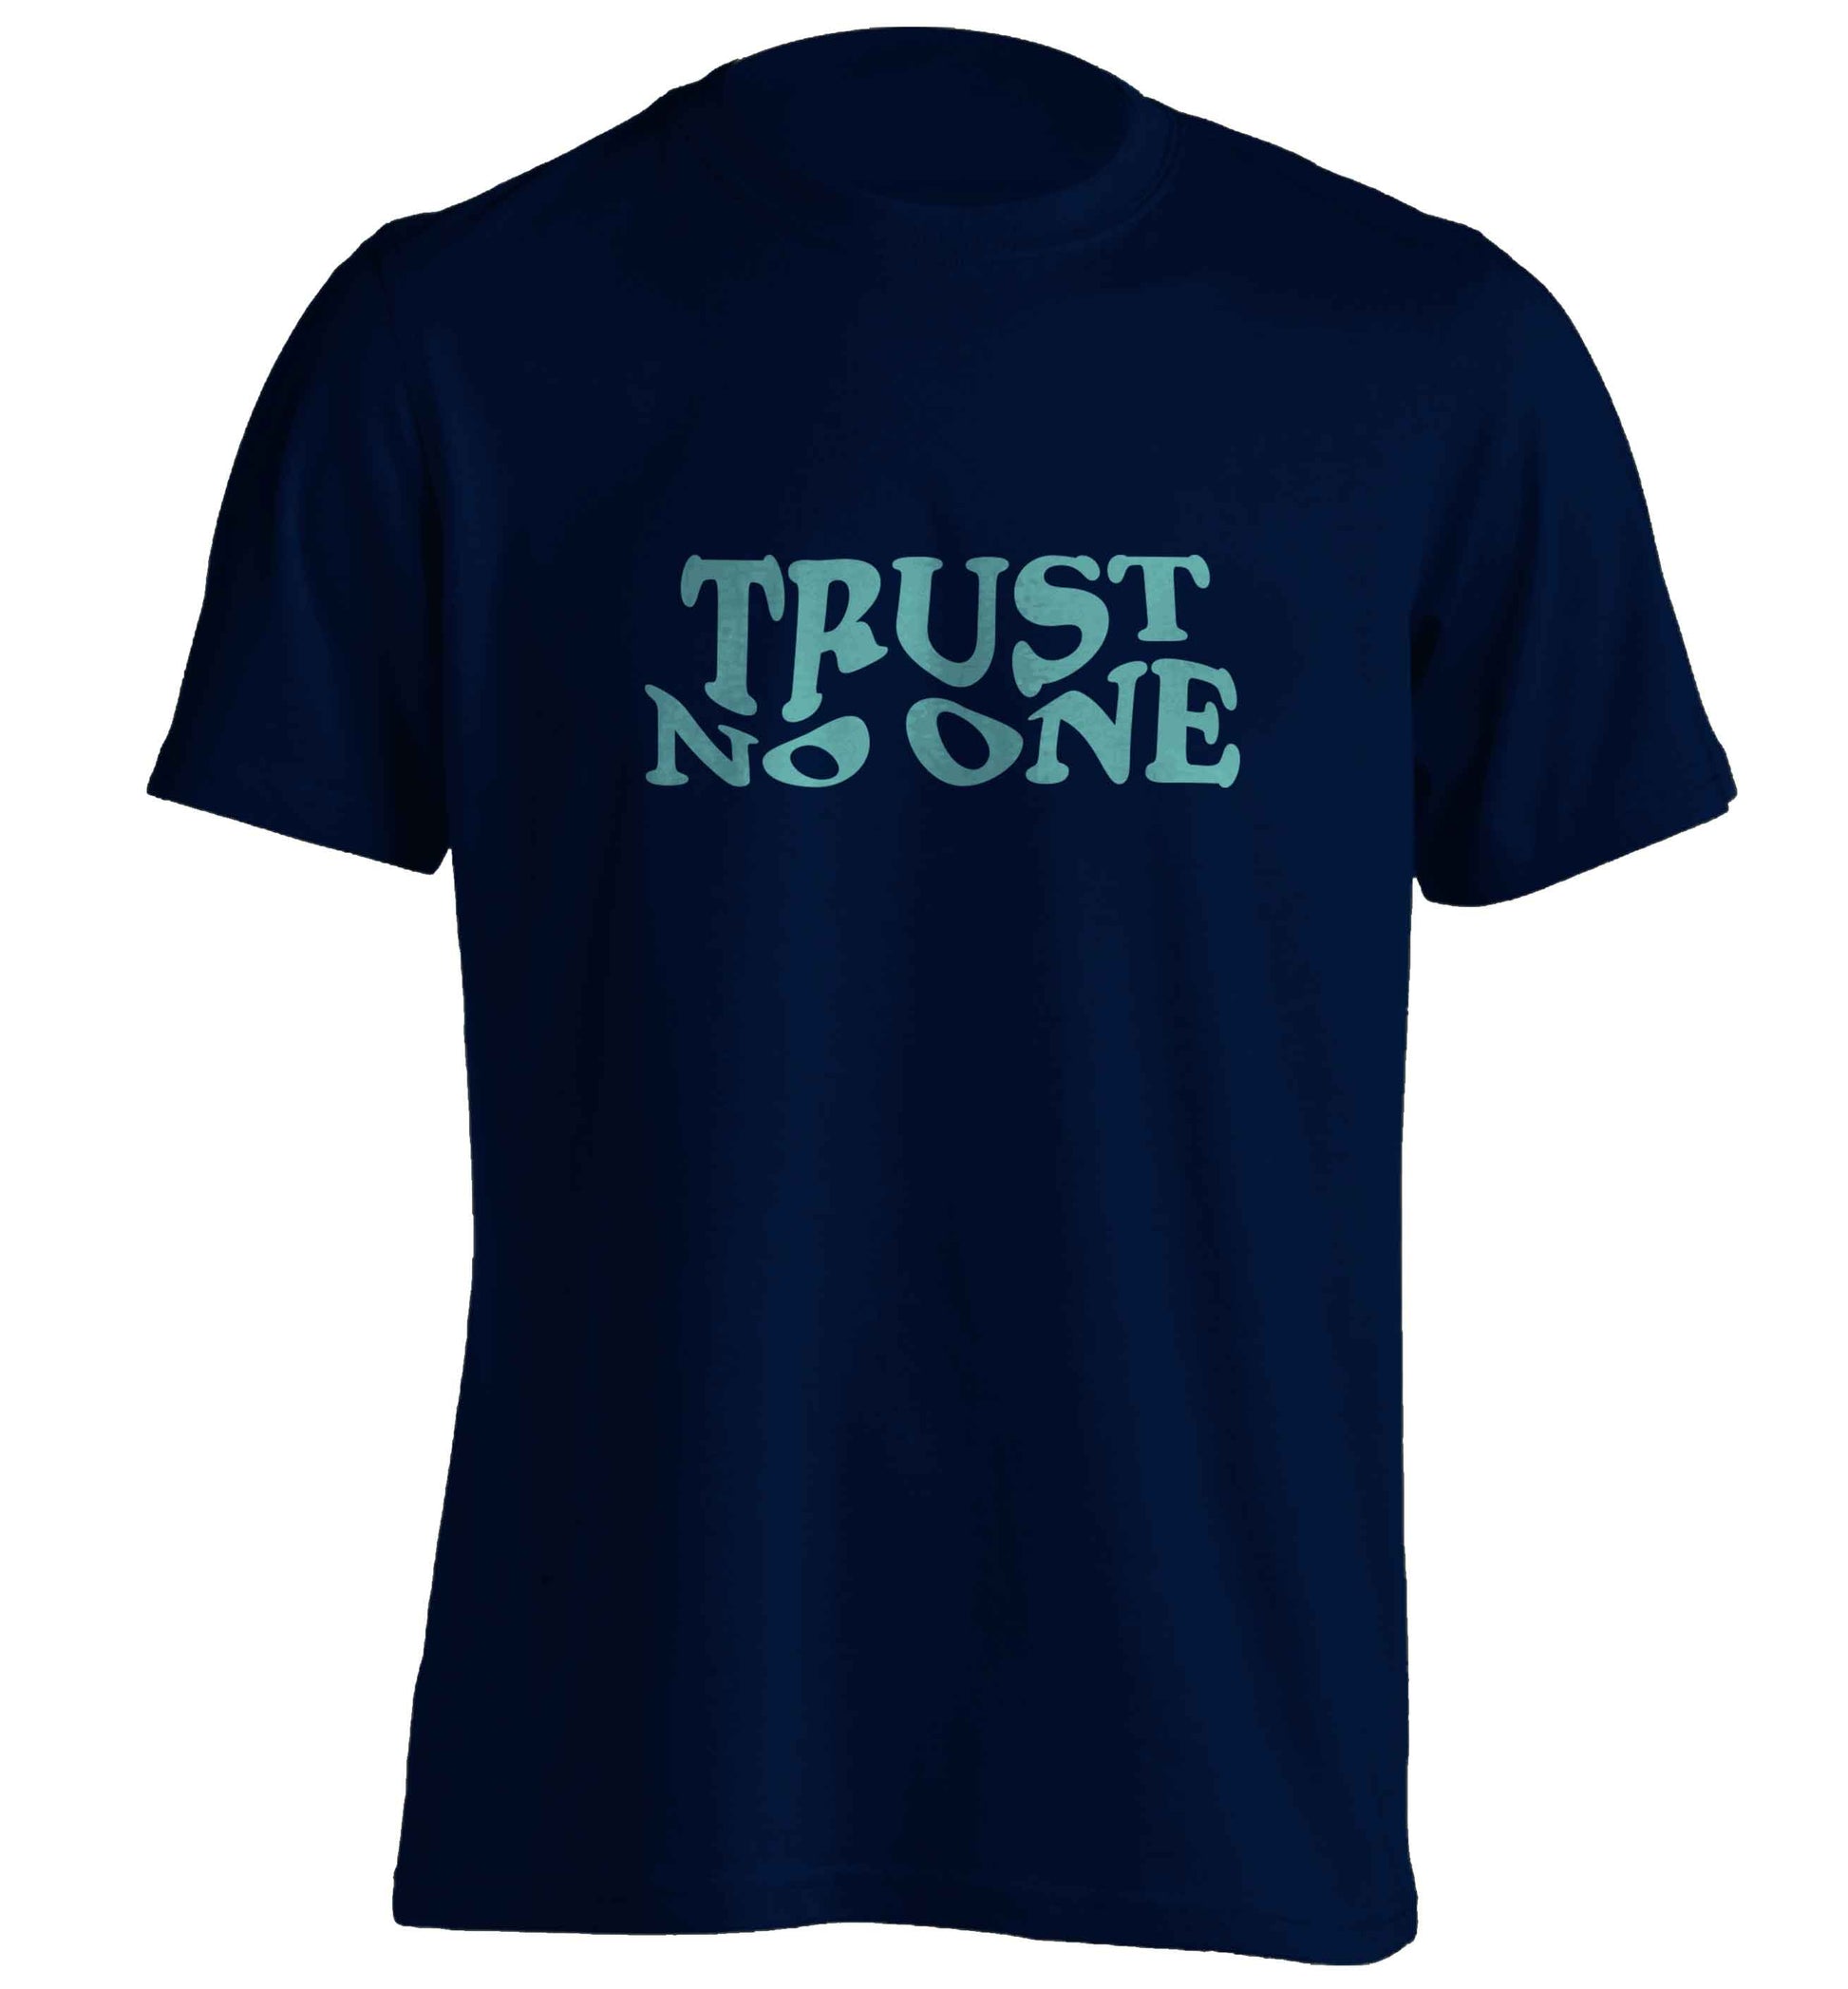 Trust no one adults unisex navy Tshirt 2XL